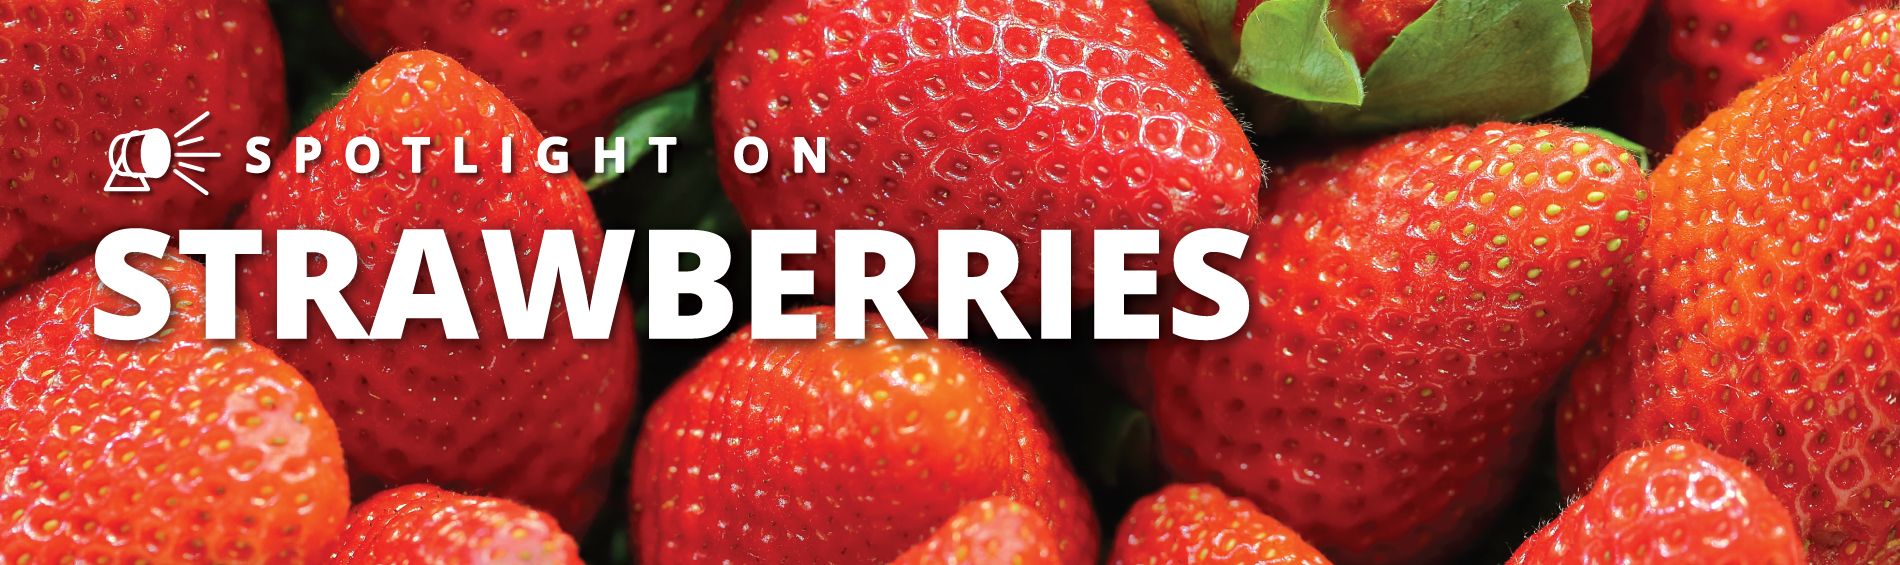 Spotlight Series on Strawberries